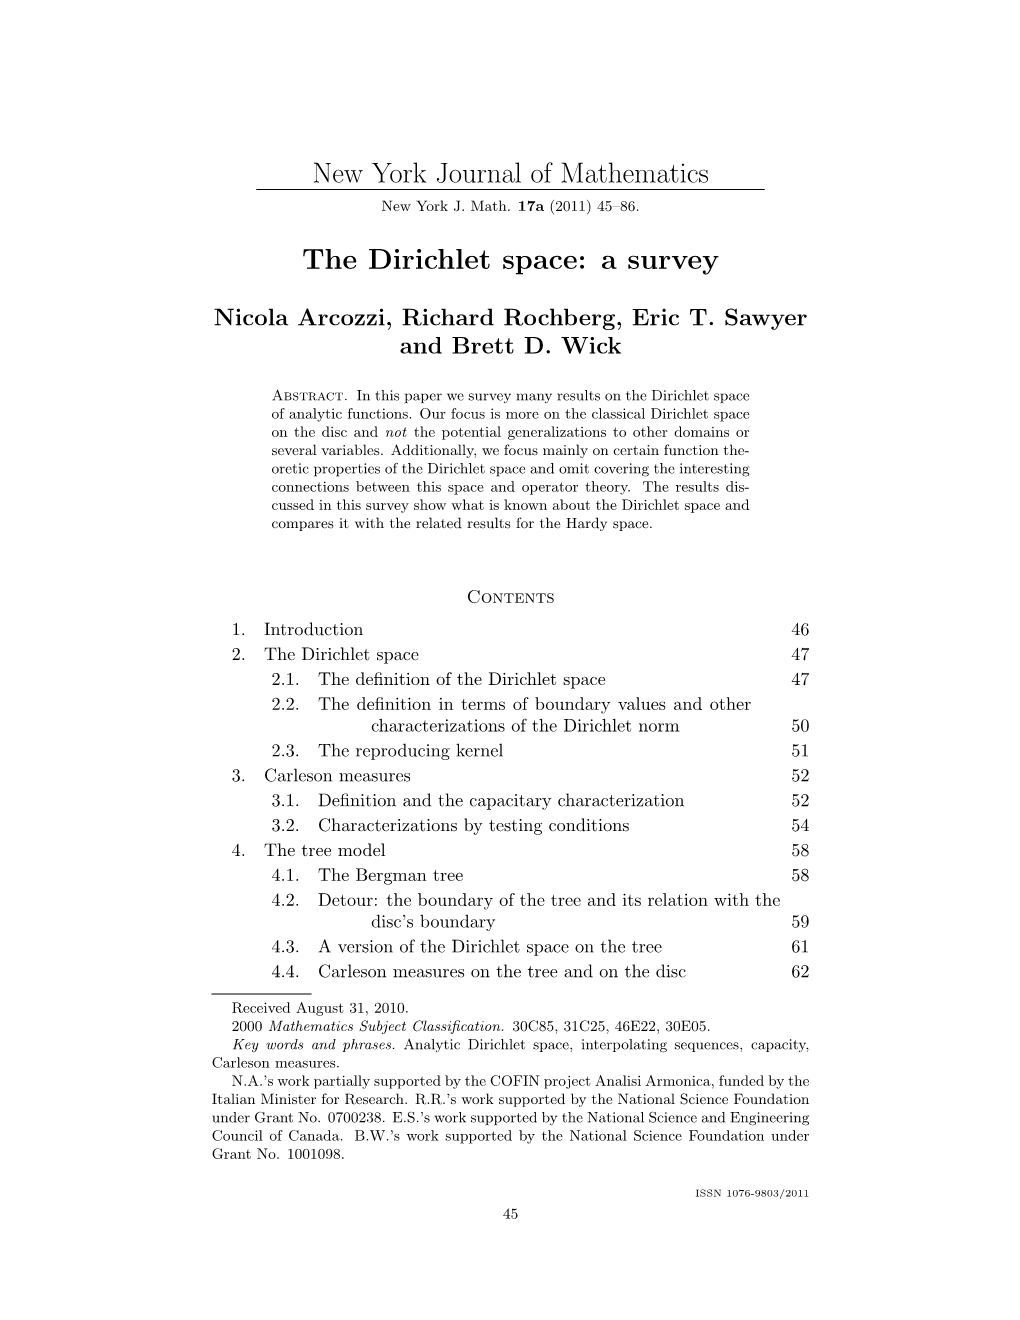 New York Journal of Mathematics the Dirichlet Space: a Survey